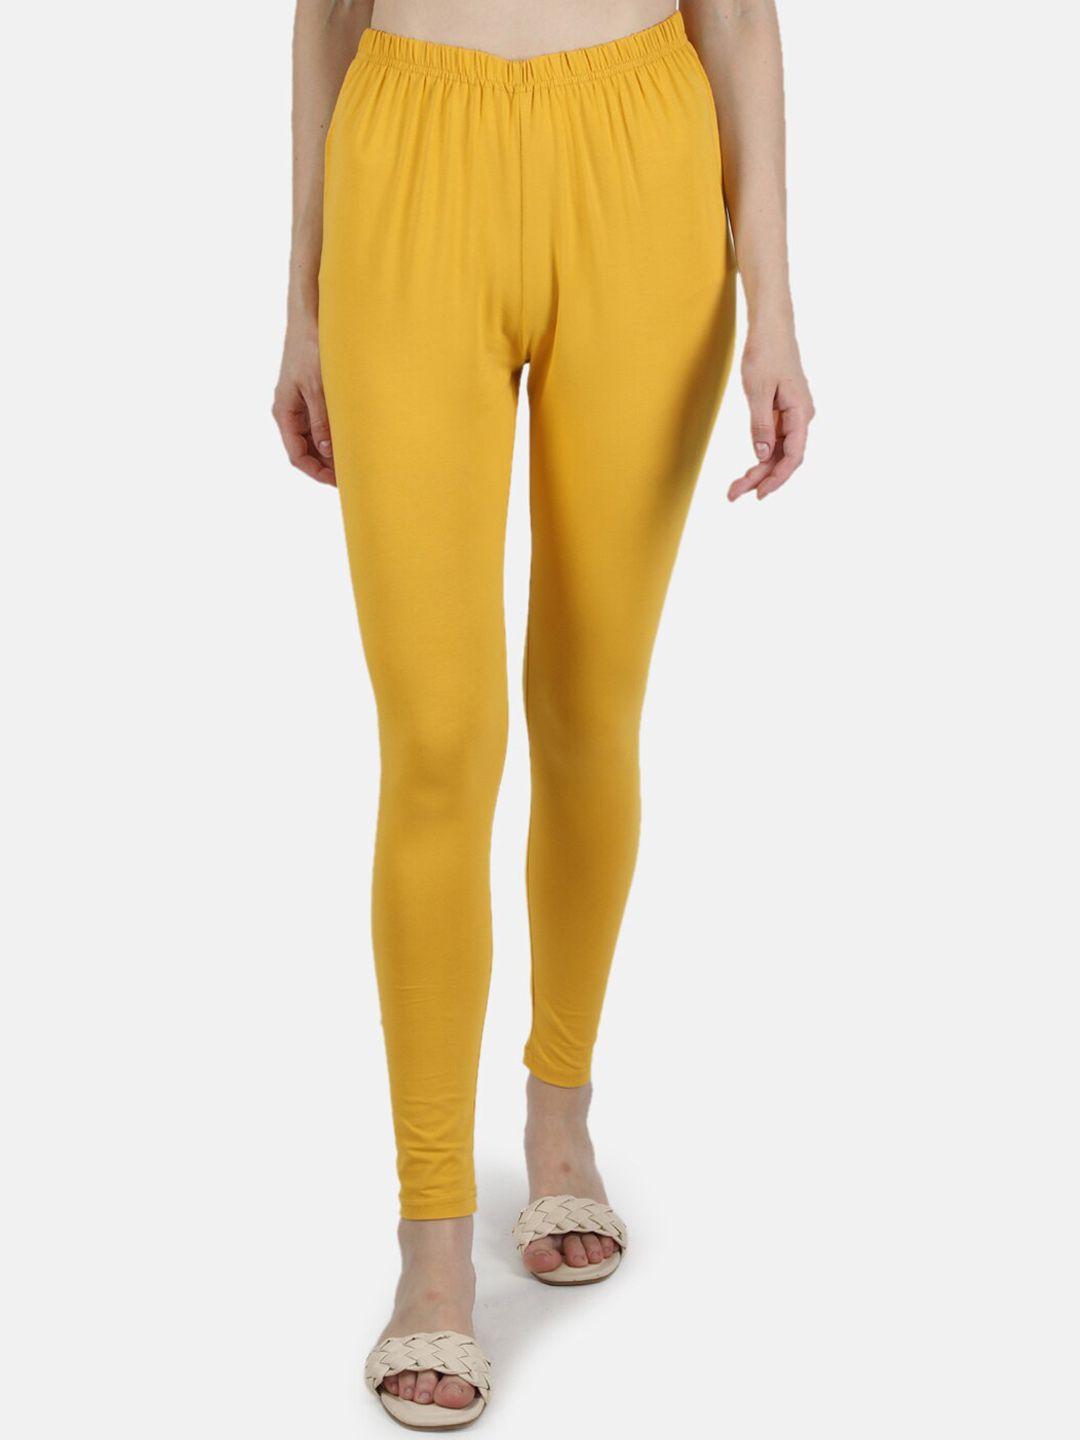 monte carlo women mustard yellow solid ankle-length leggings